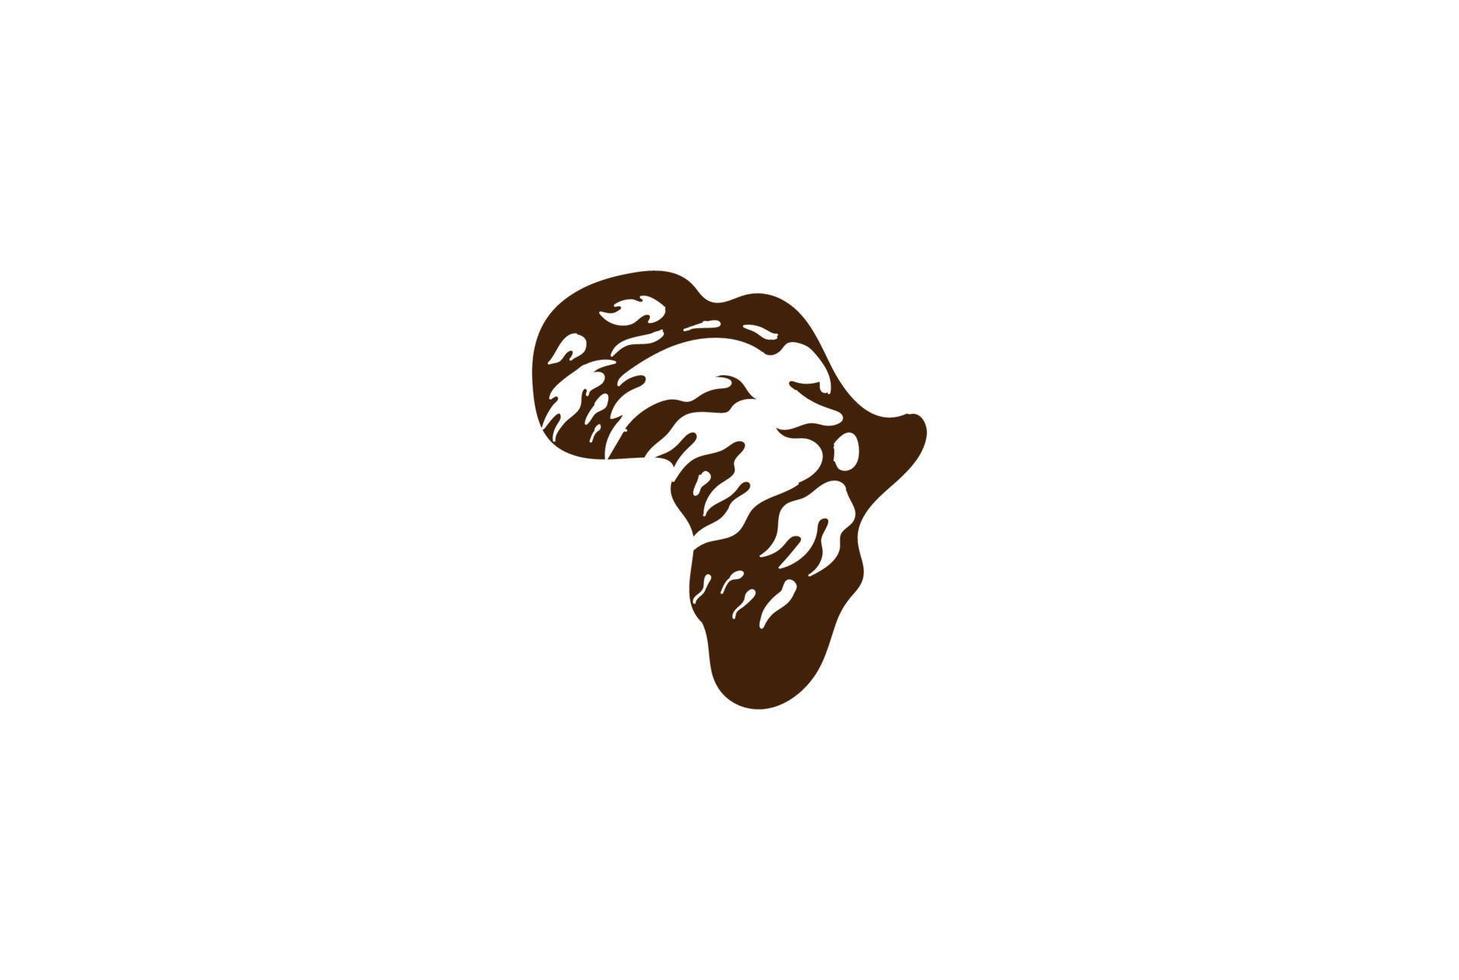 silueta de mapa del continente africano con vector de diseño de logotipo de cara de león